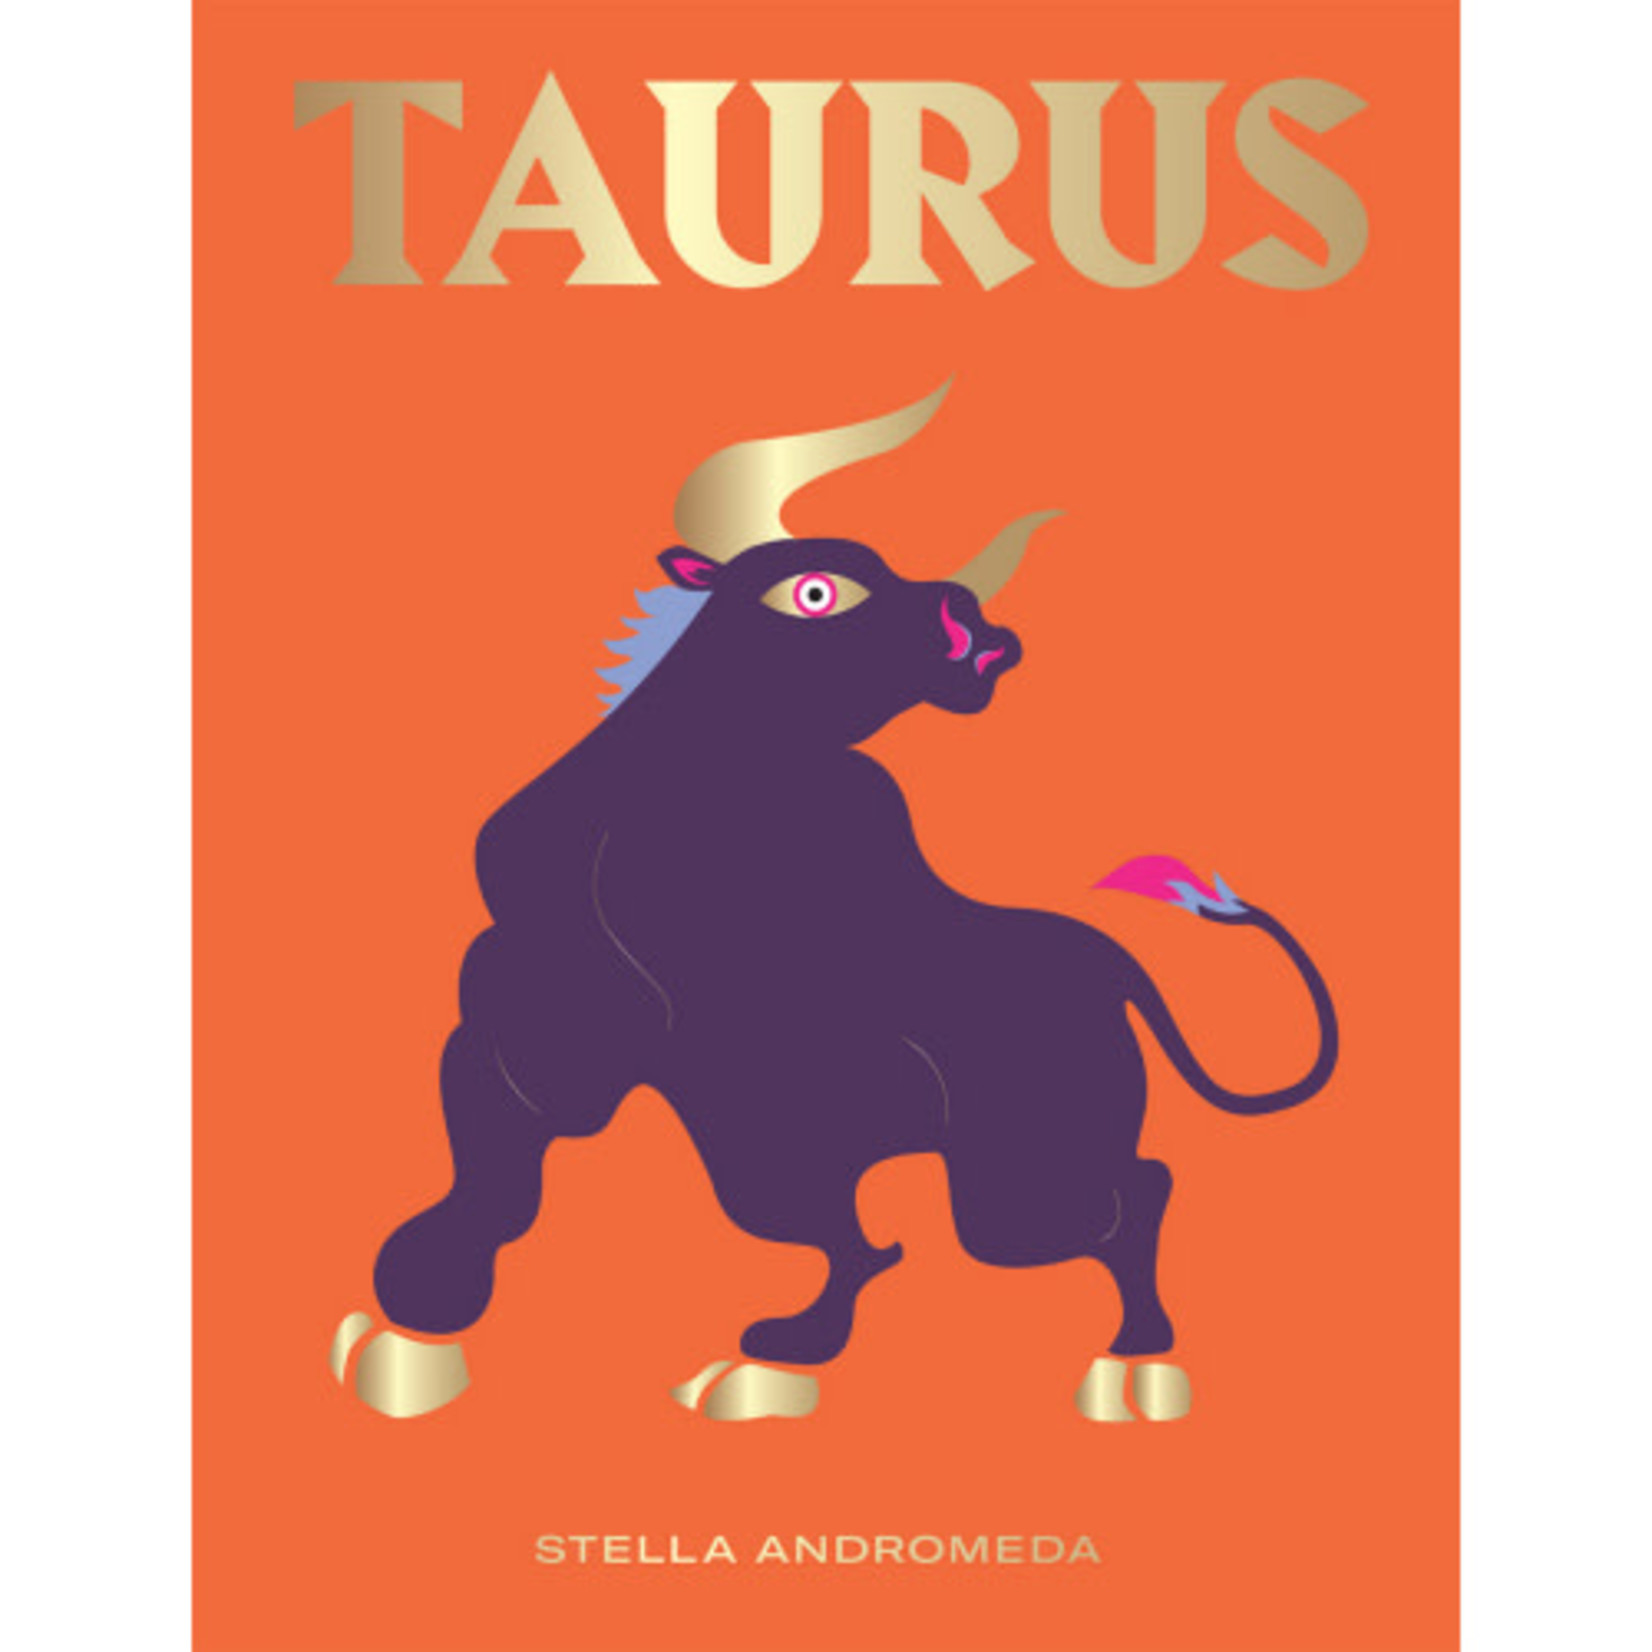 Seeing Stars: Taurus